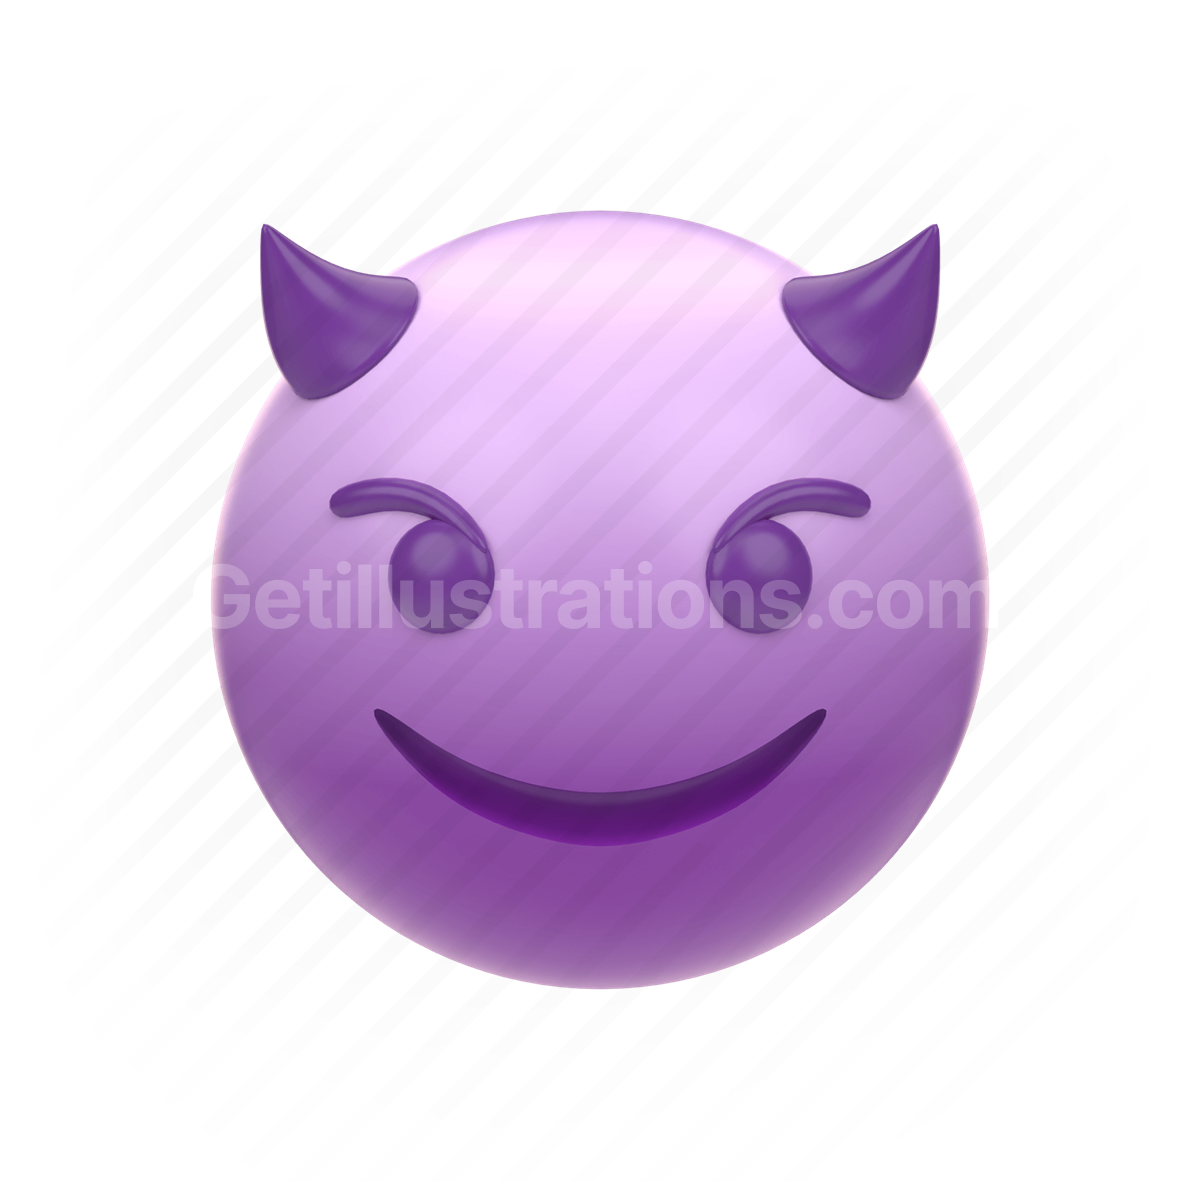 Emoji 3D illustration